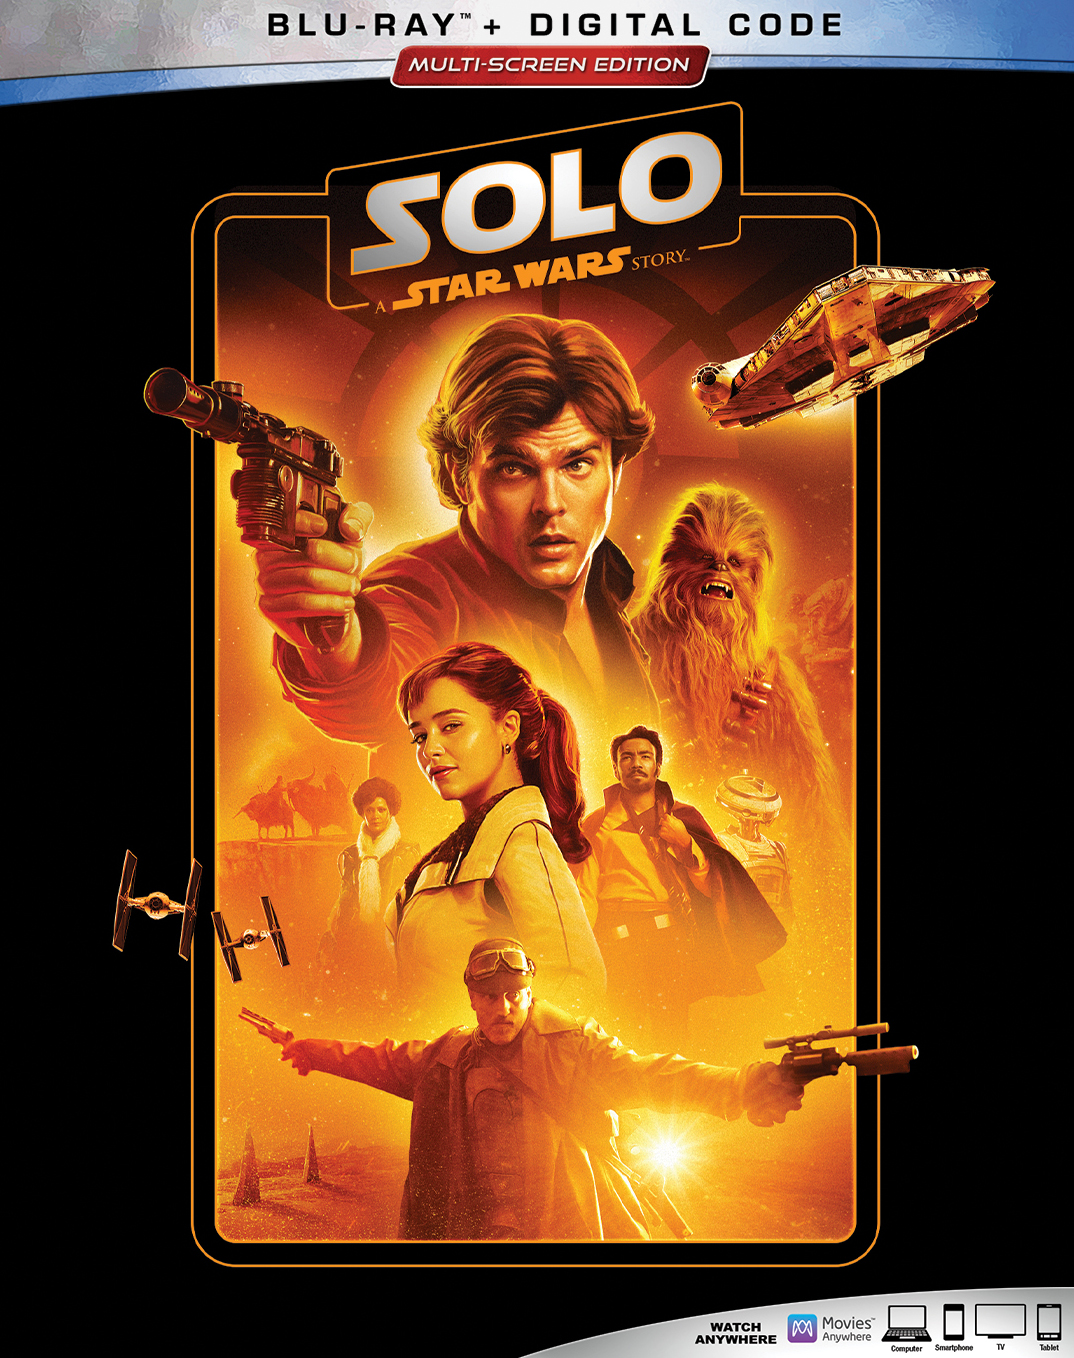 Best　[Blu-ray]　Story　A　[2018]　Copy]　Digital　Buy　Wars　Star　Solo:　[Includes